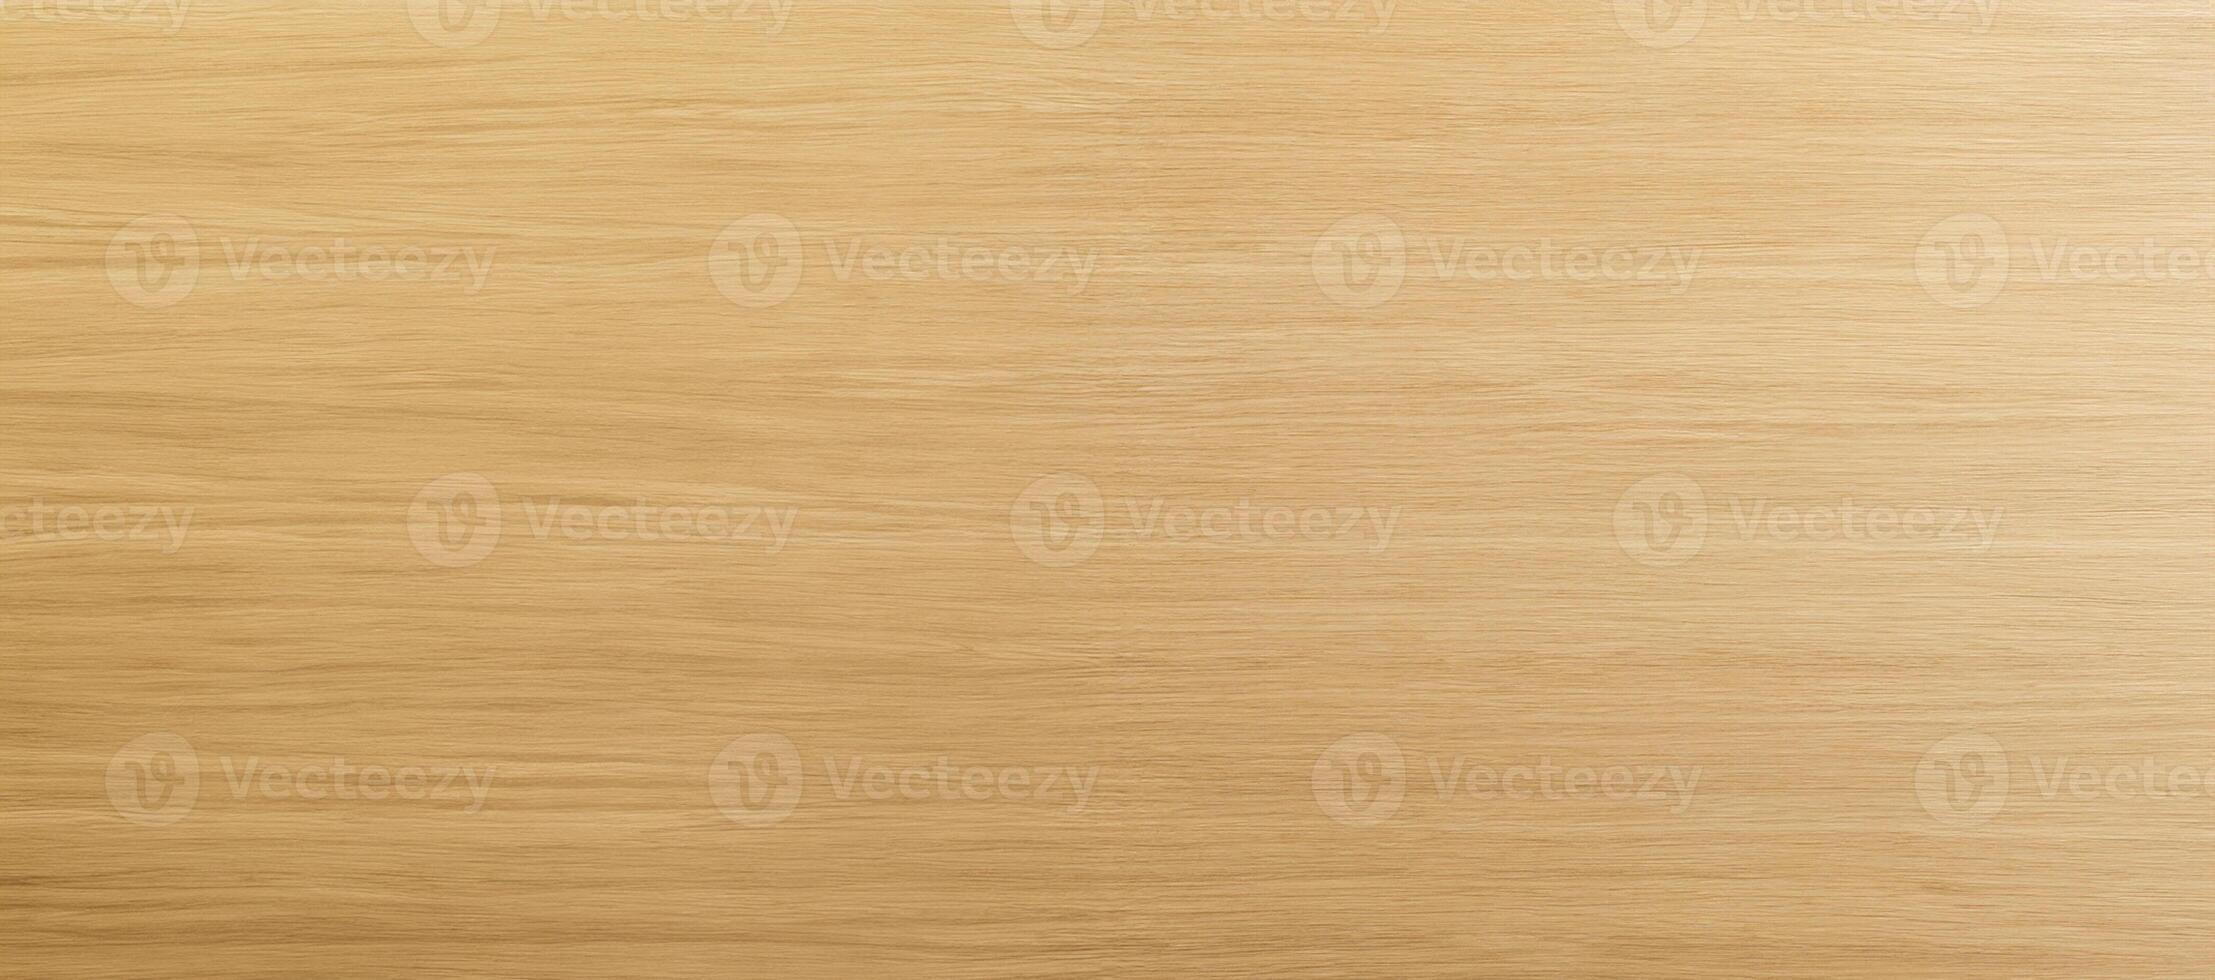 Light Wood Panel Texture Background photo